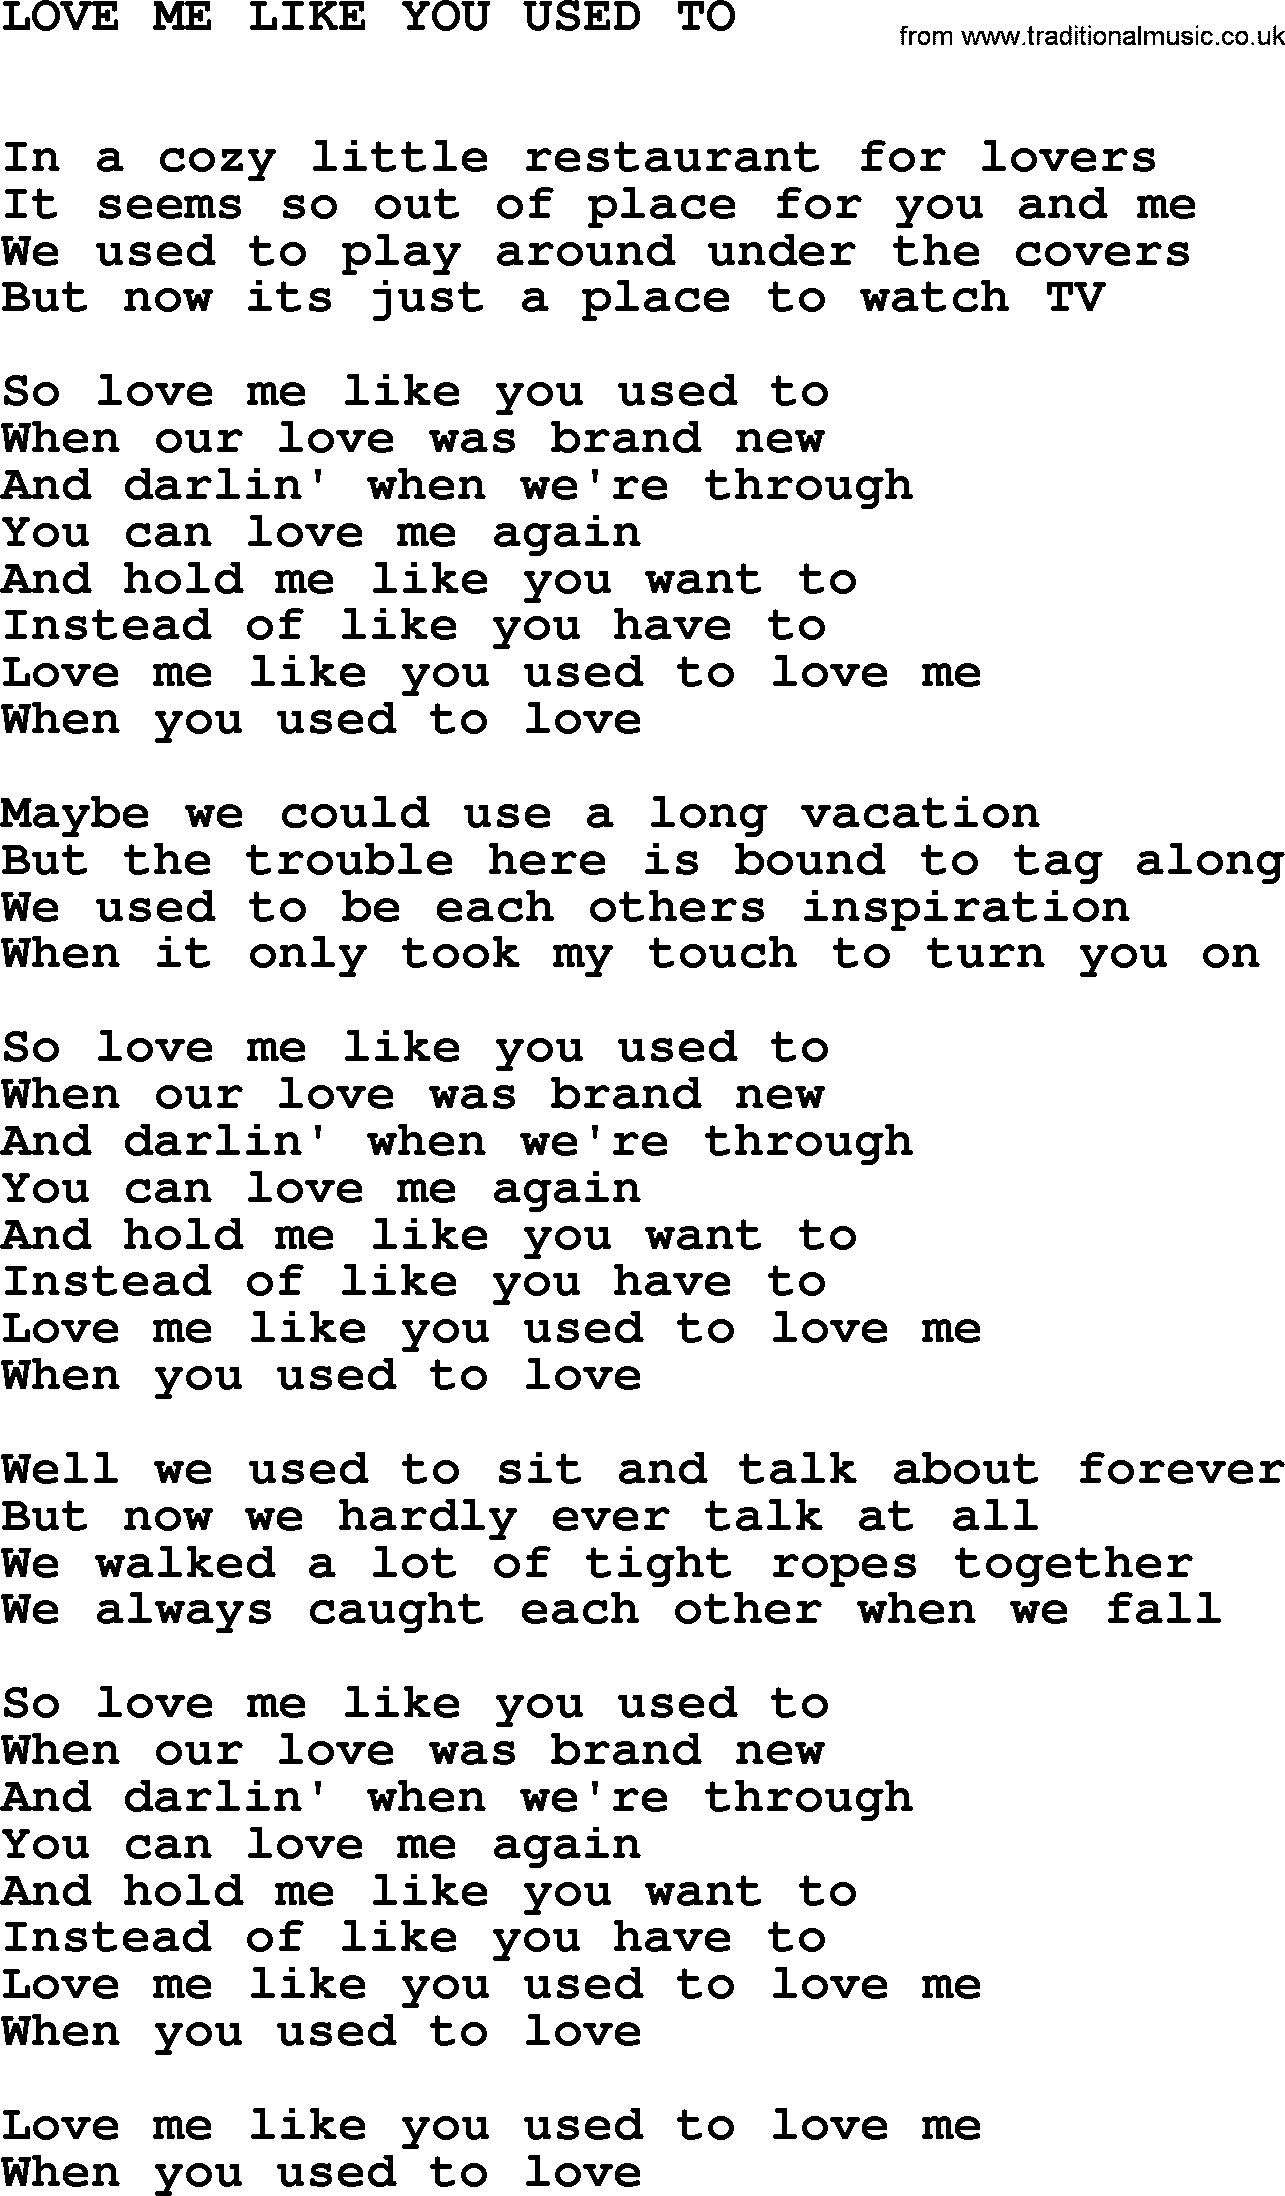 Johnny Cash song Love Me Like You Used To.txt lyrics